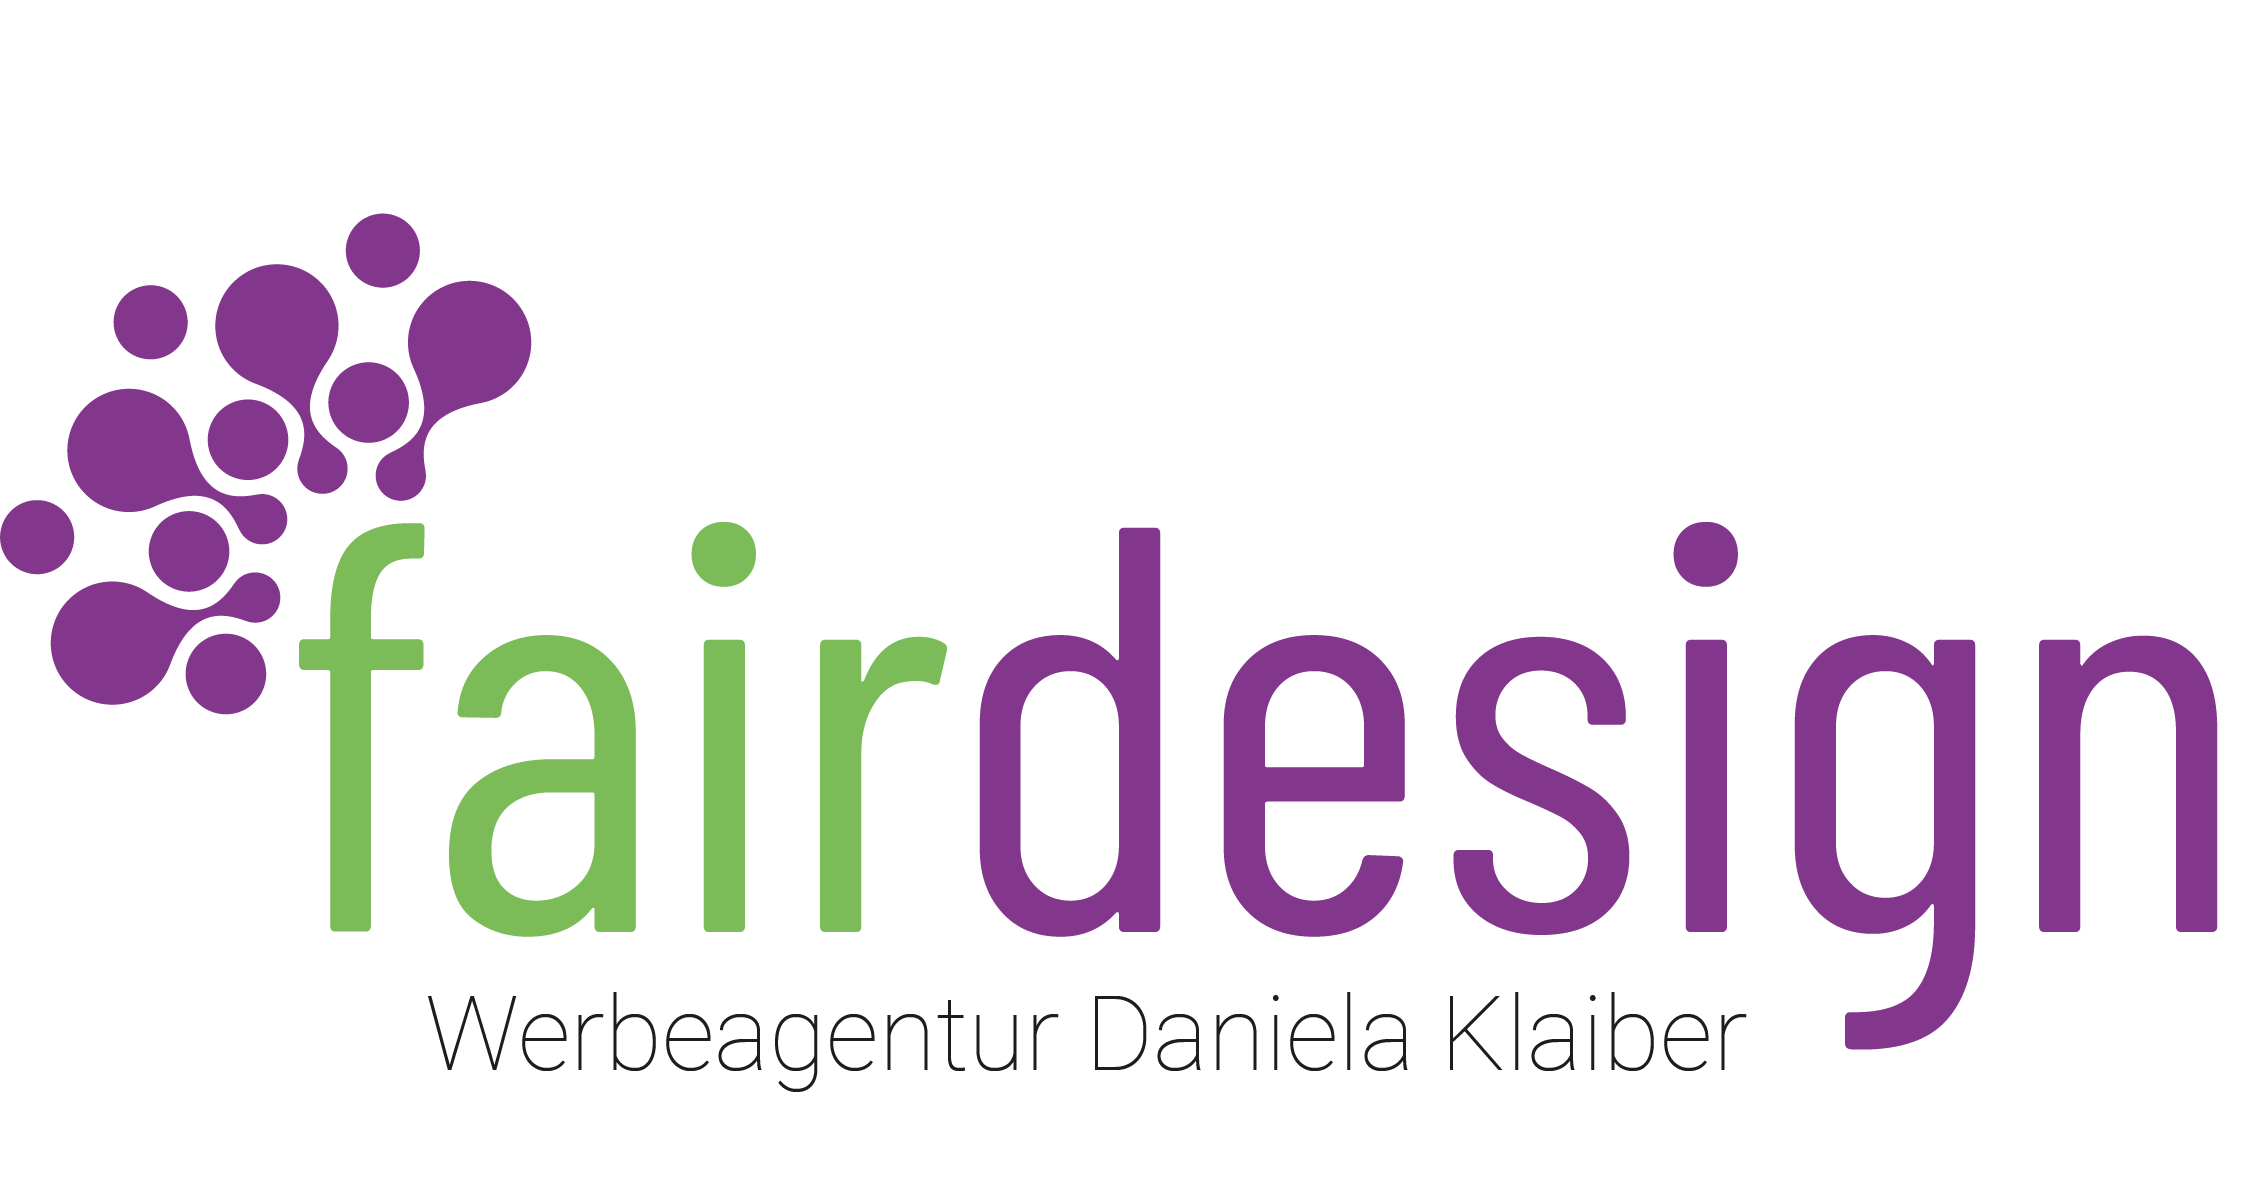 Logo fairdesign